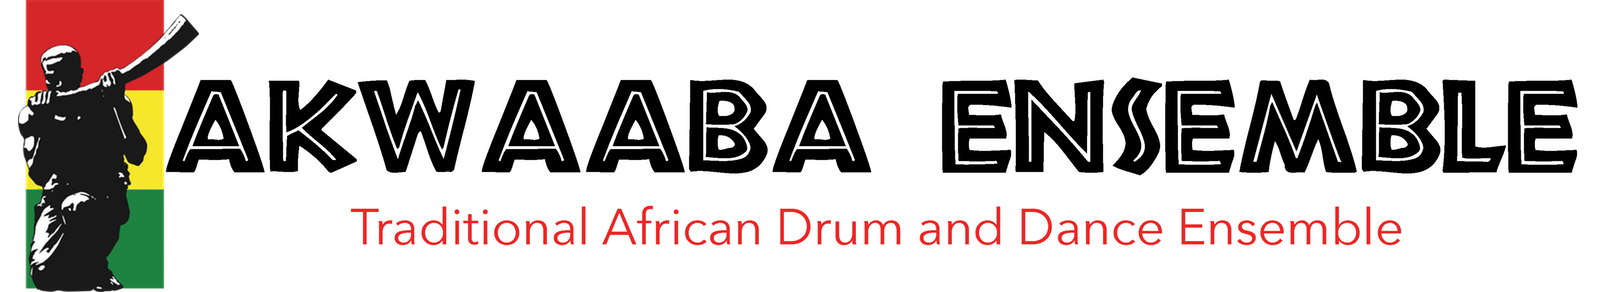 The Akwaaba Ensemble